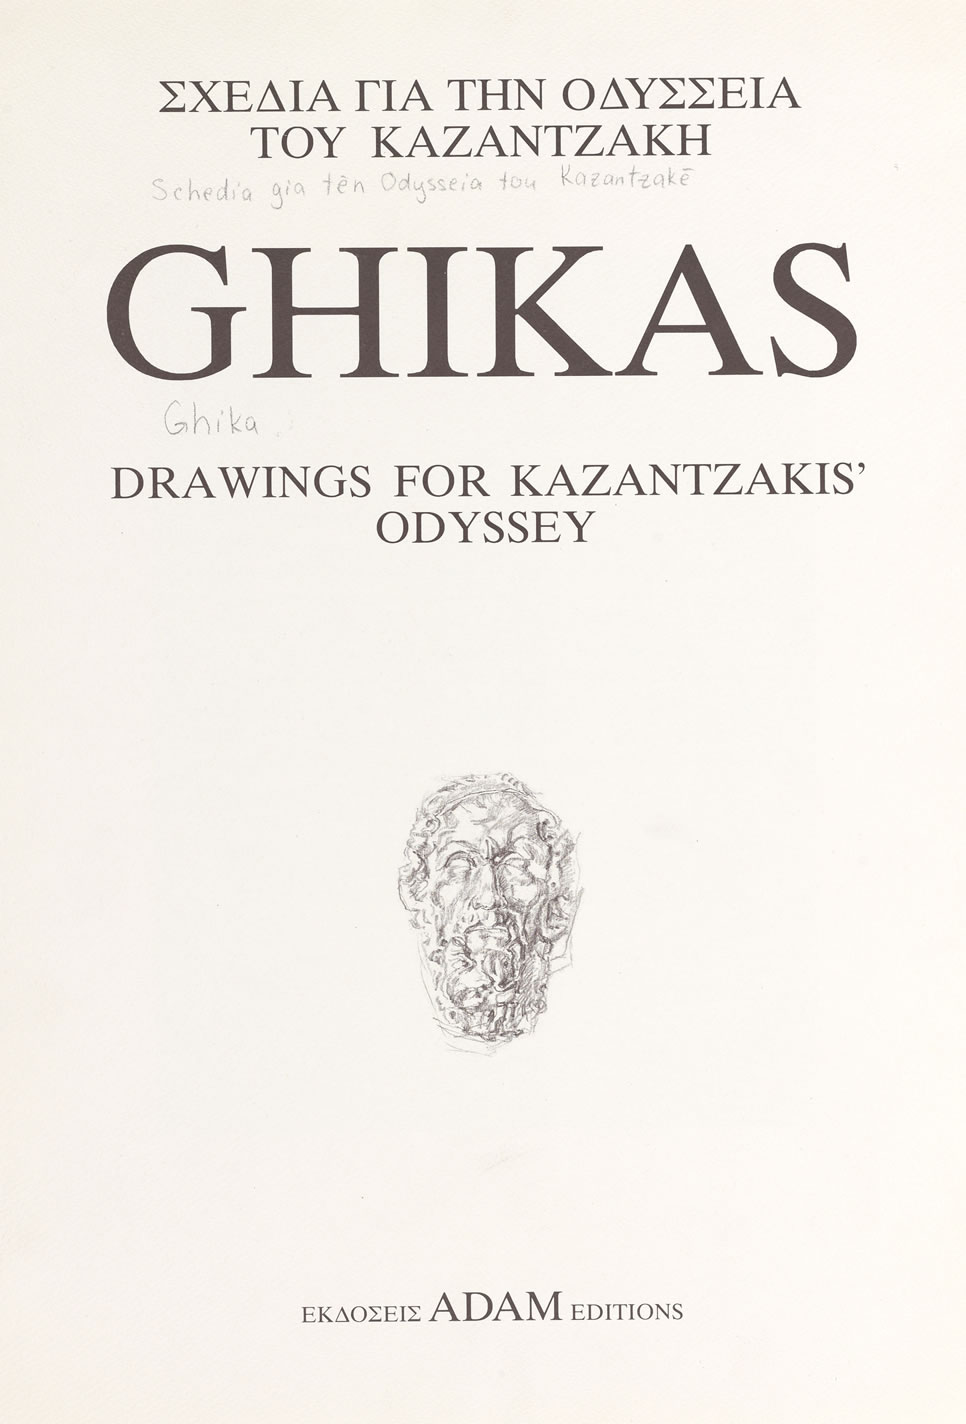 Drawings for Kazantzakis' Odyssey